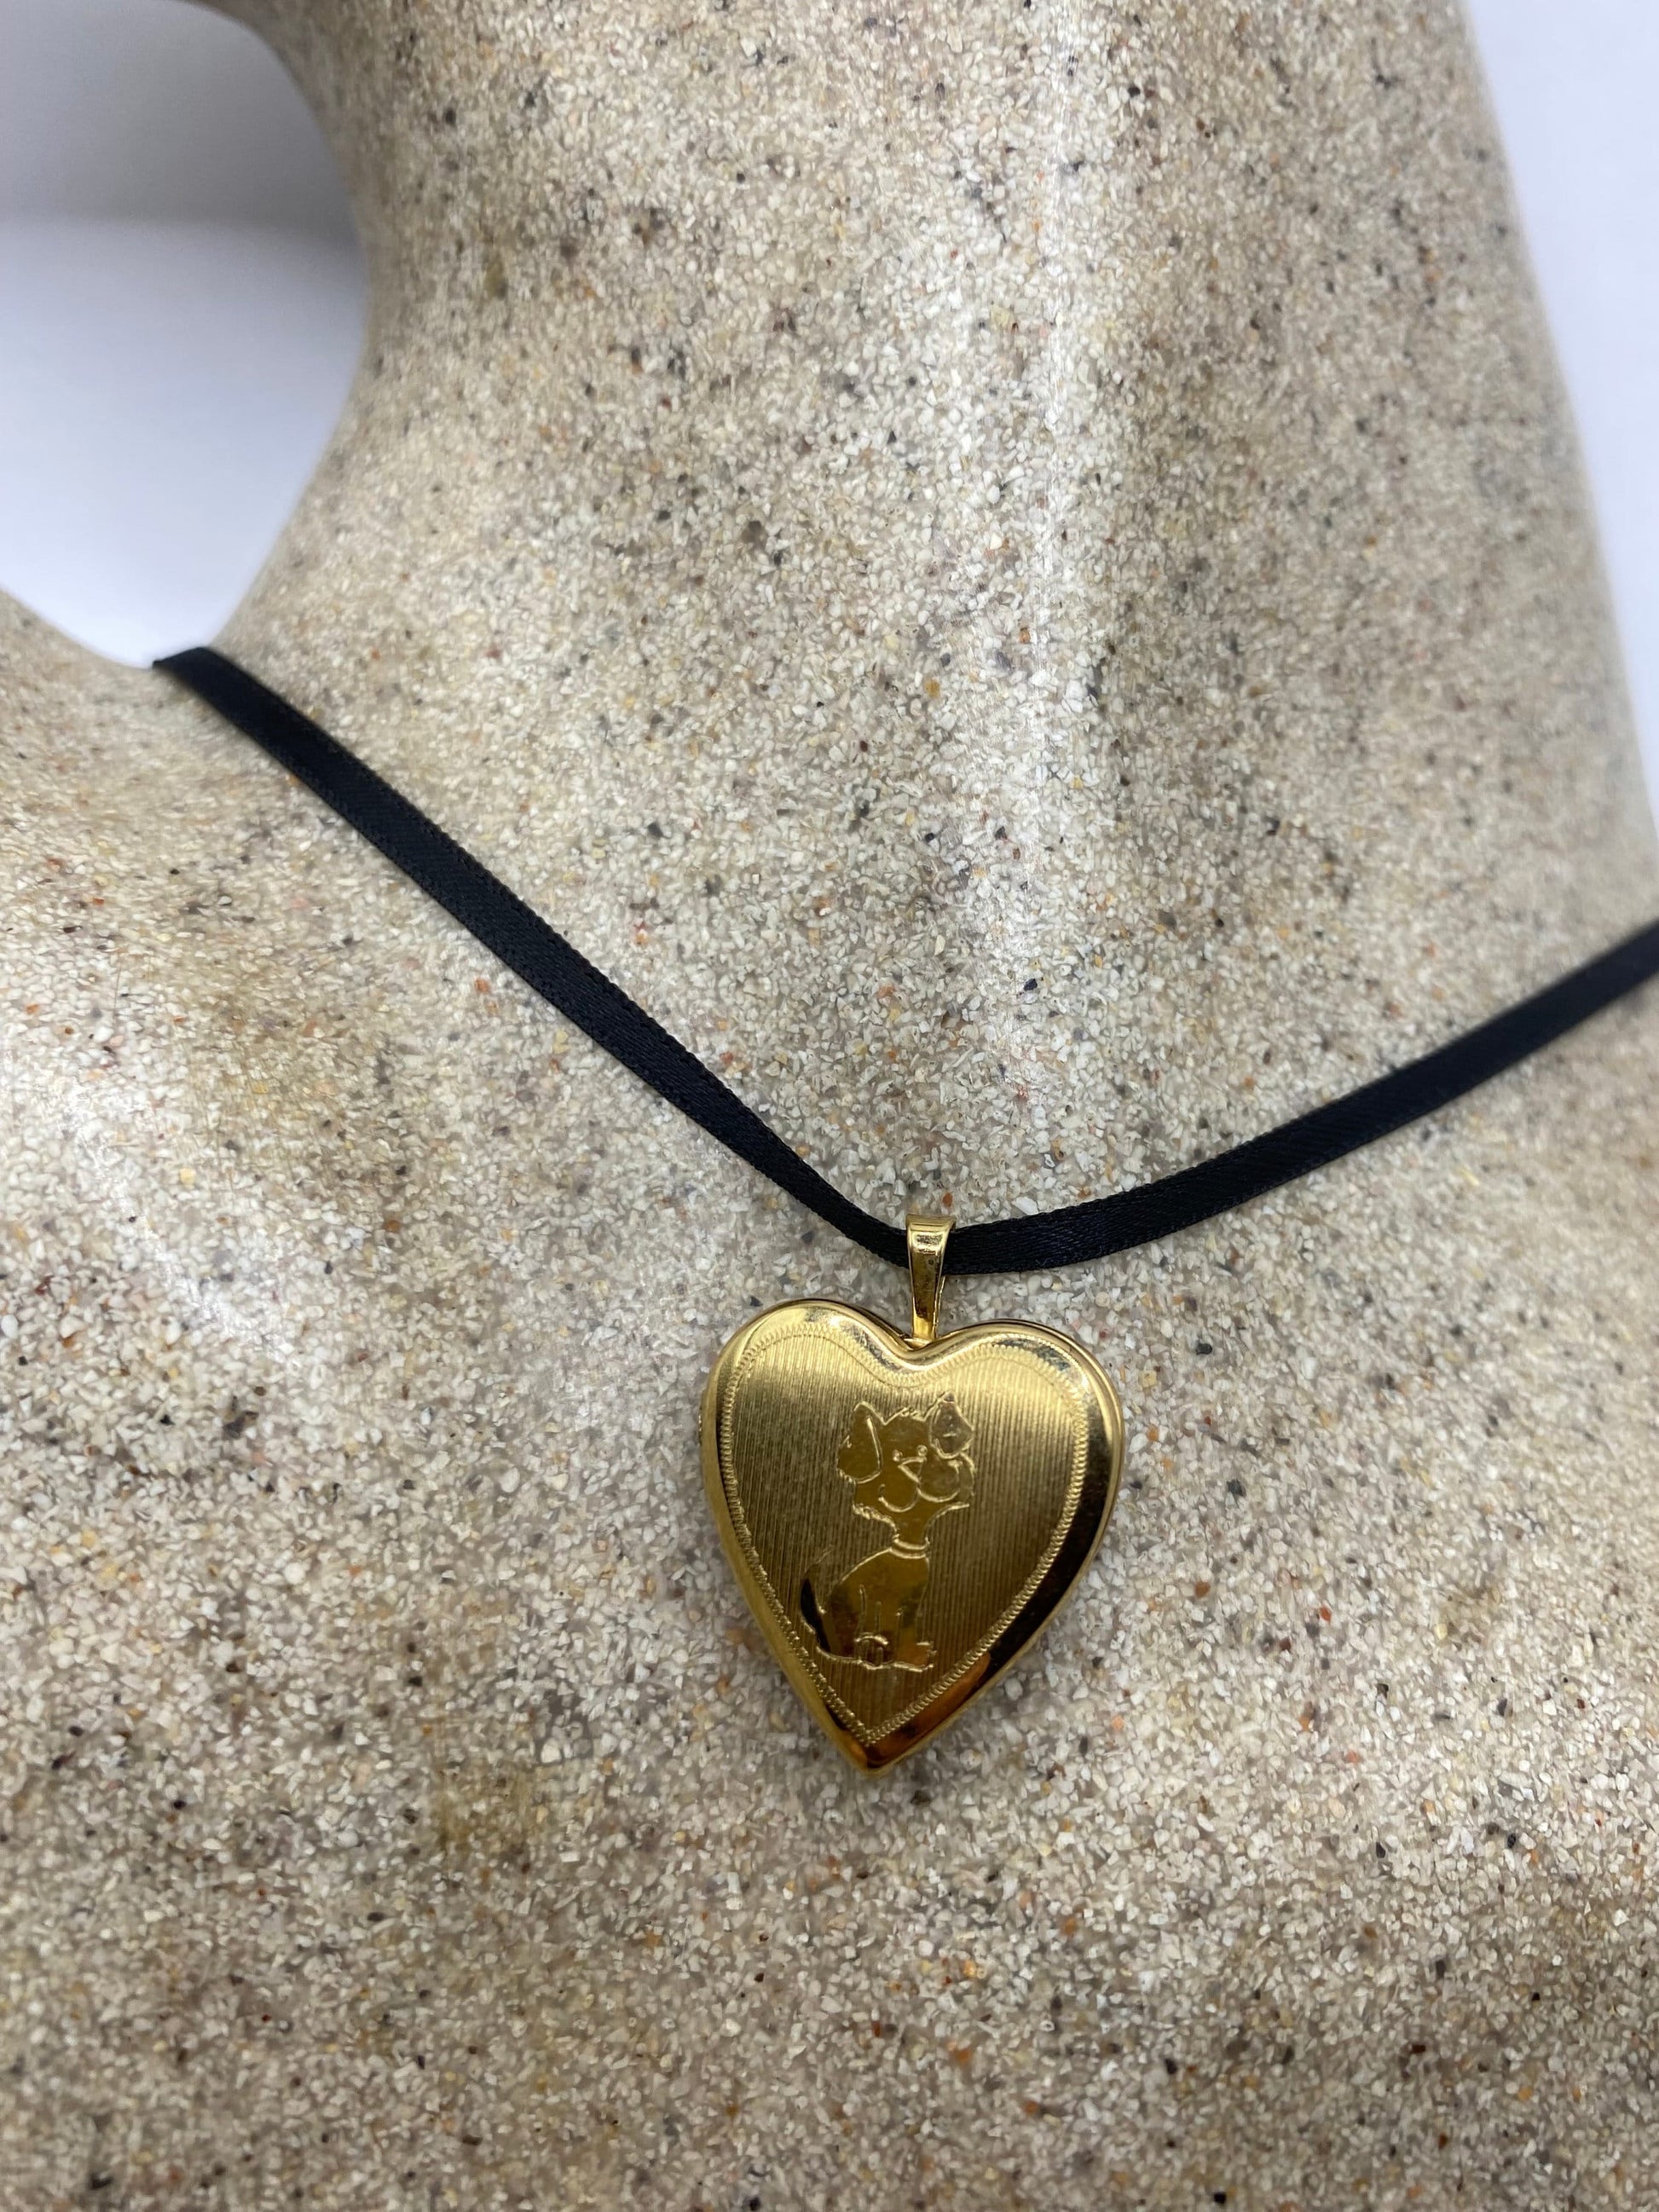 Vintage Gold Locket | Tiny Heart 9k Gold Filled Pendant Photo Memory Charm Engraved Angel Cherub | Choker Necklace